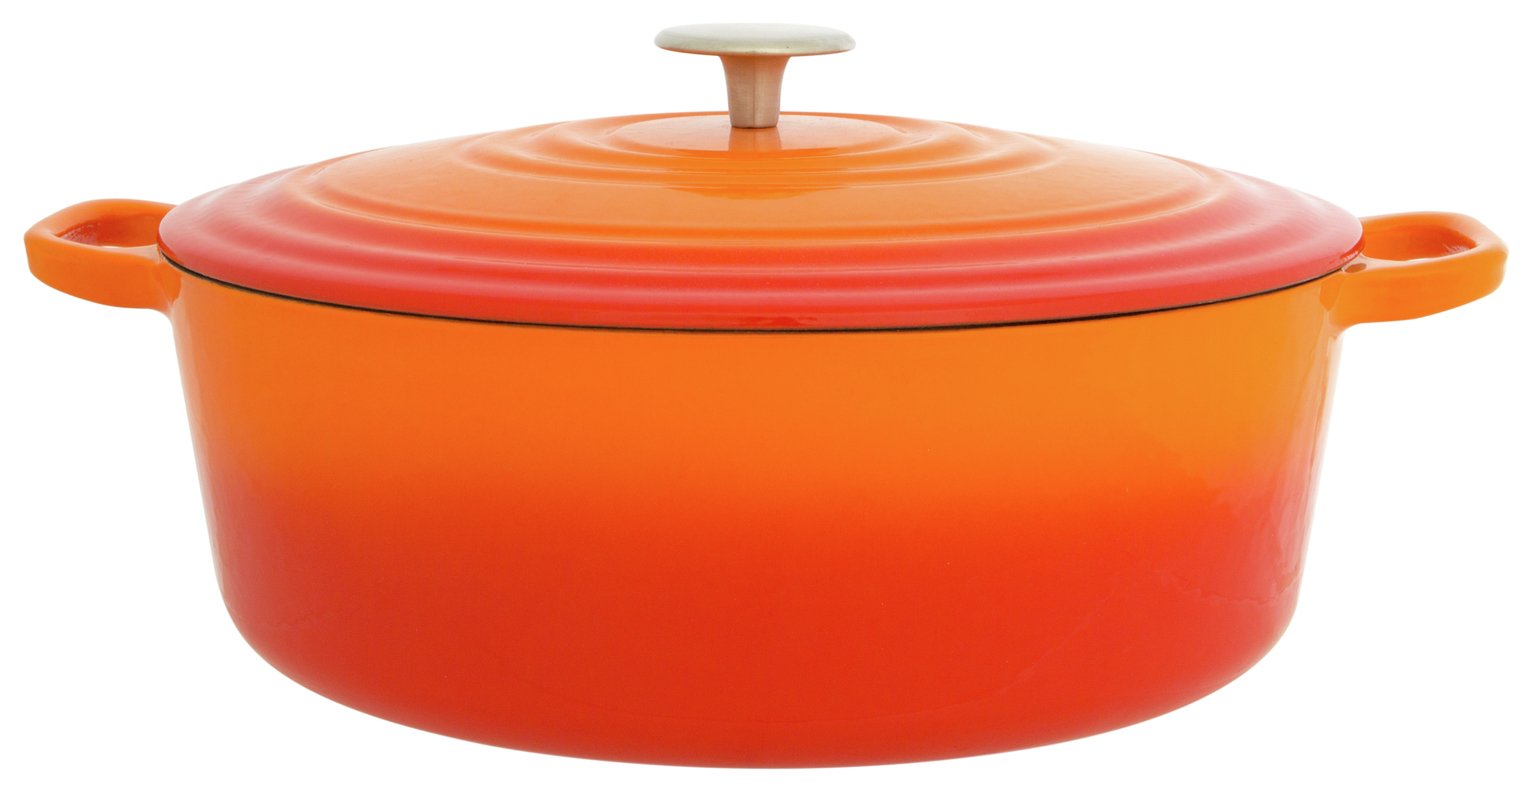 Sainsbury's Home 4.7L Cast Iron Oval Casserole Dish - Orange